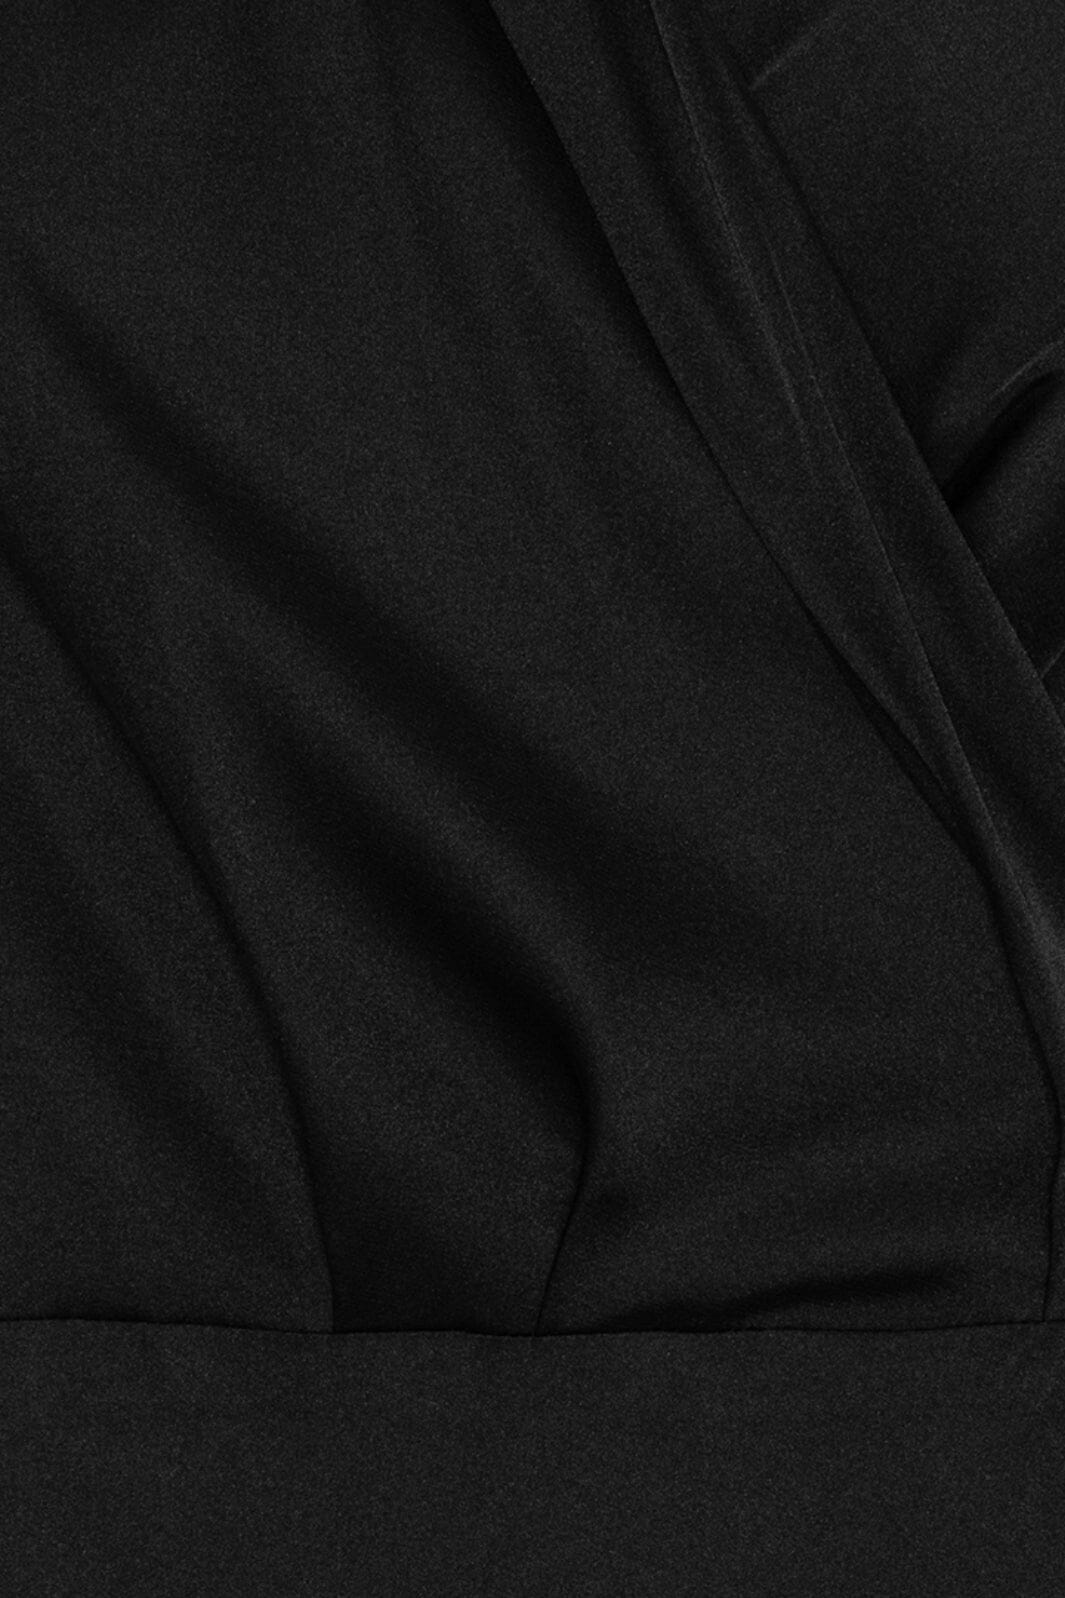 Karmamia - Bea Dress - Black Kjoler 